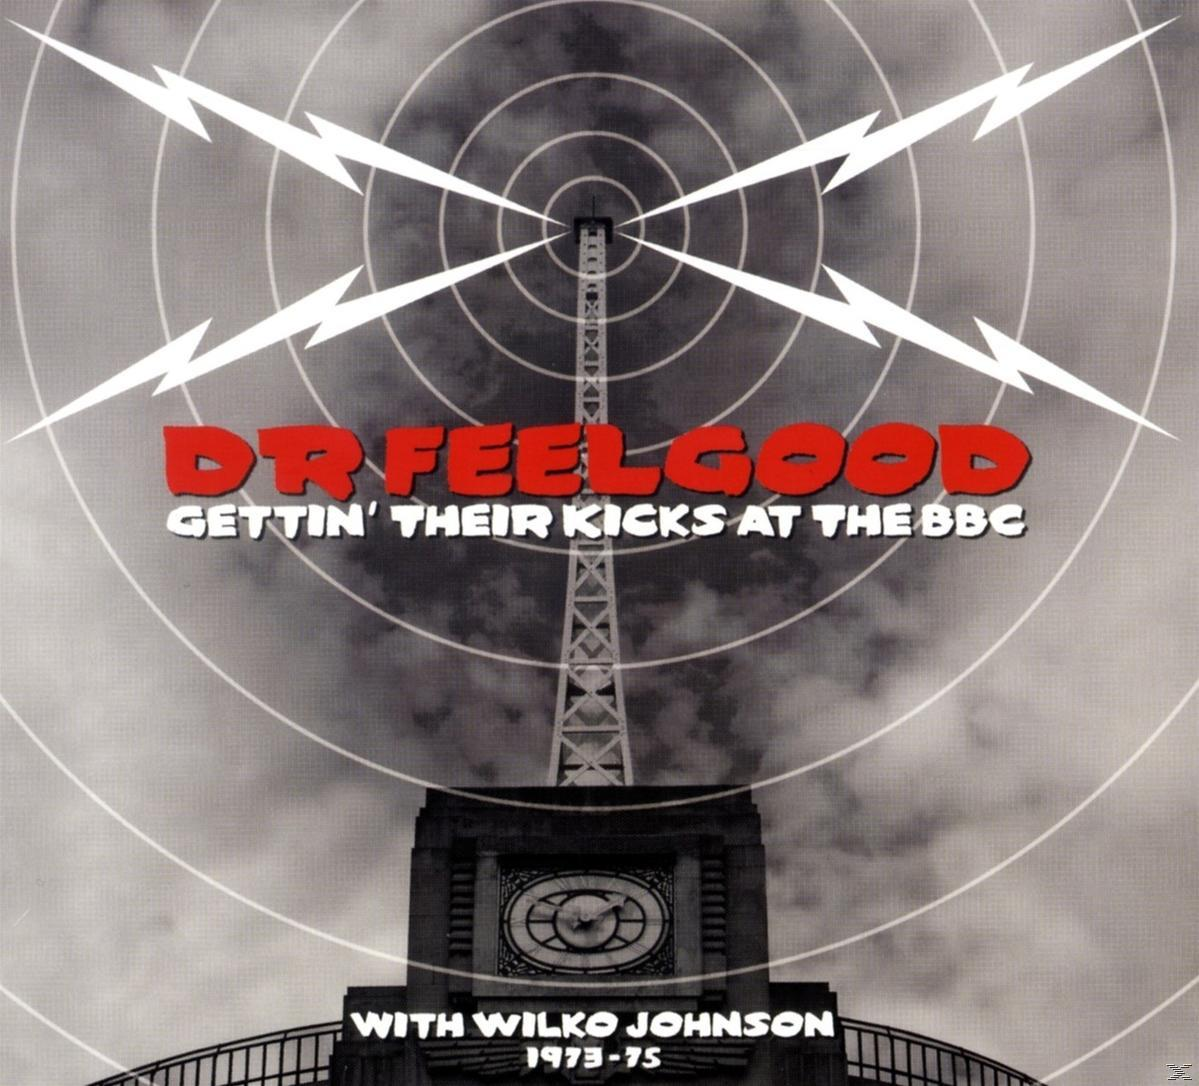 Feelgood - Their At Bbc Kicks Gettin\' (CD) Dr. - The